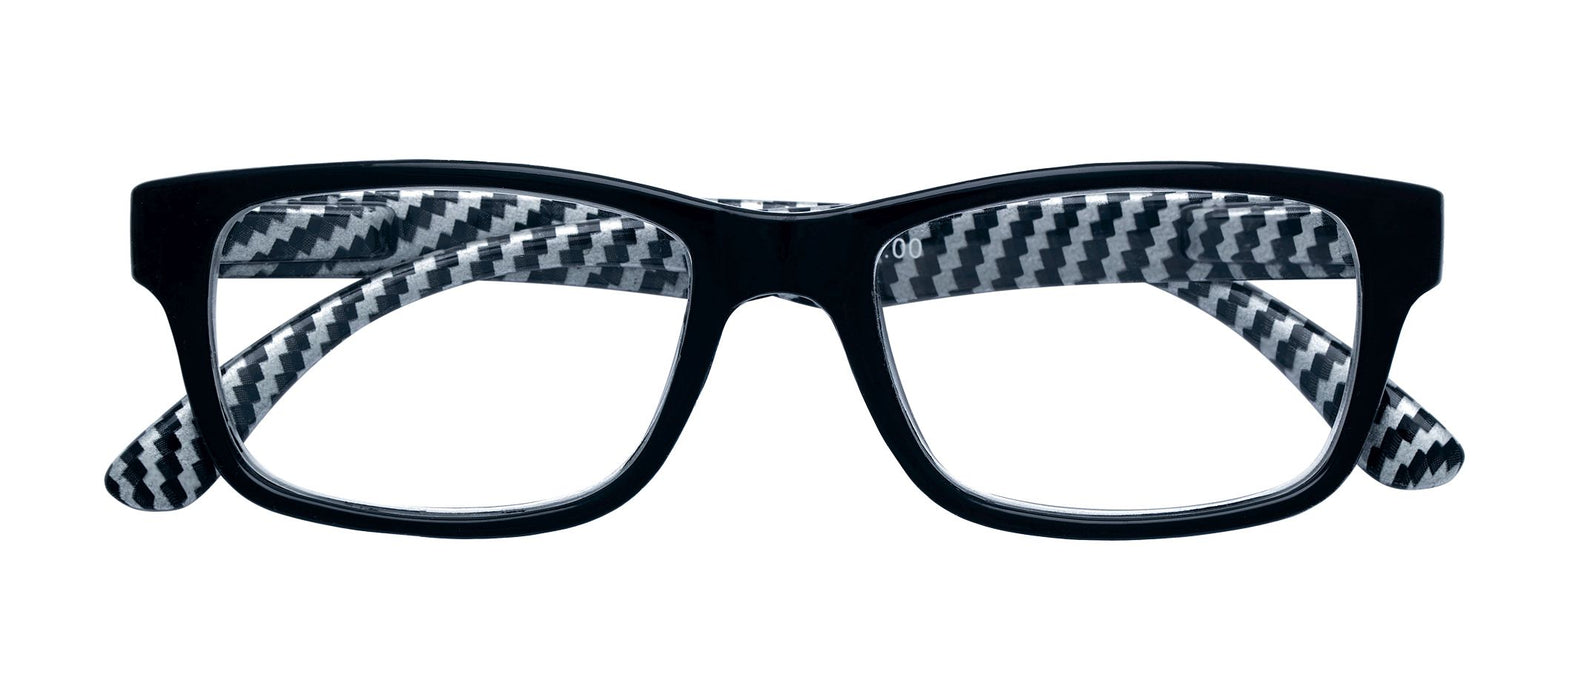 ZIPPO occhiali da lettura +1.50 31Z-PR74-150